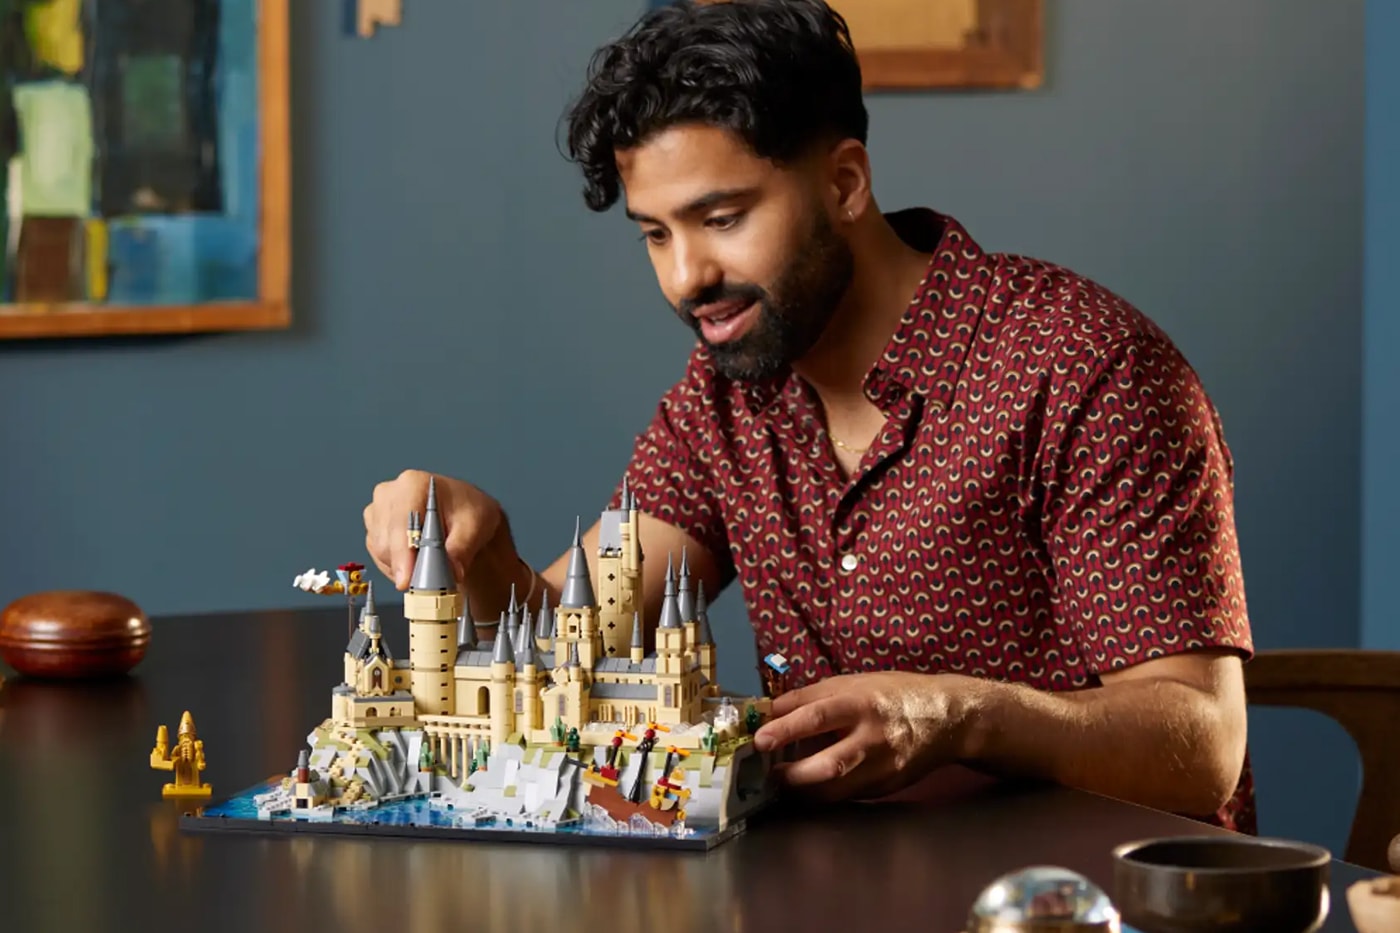 LEGO 推出《哈利波特 Harry Potter》霍格華滋城堡全新積木套組